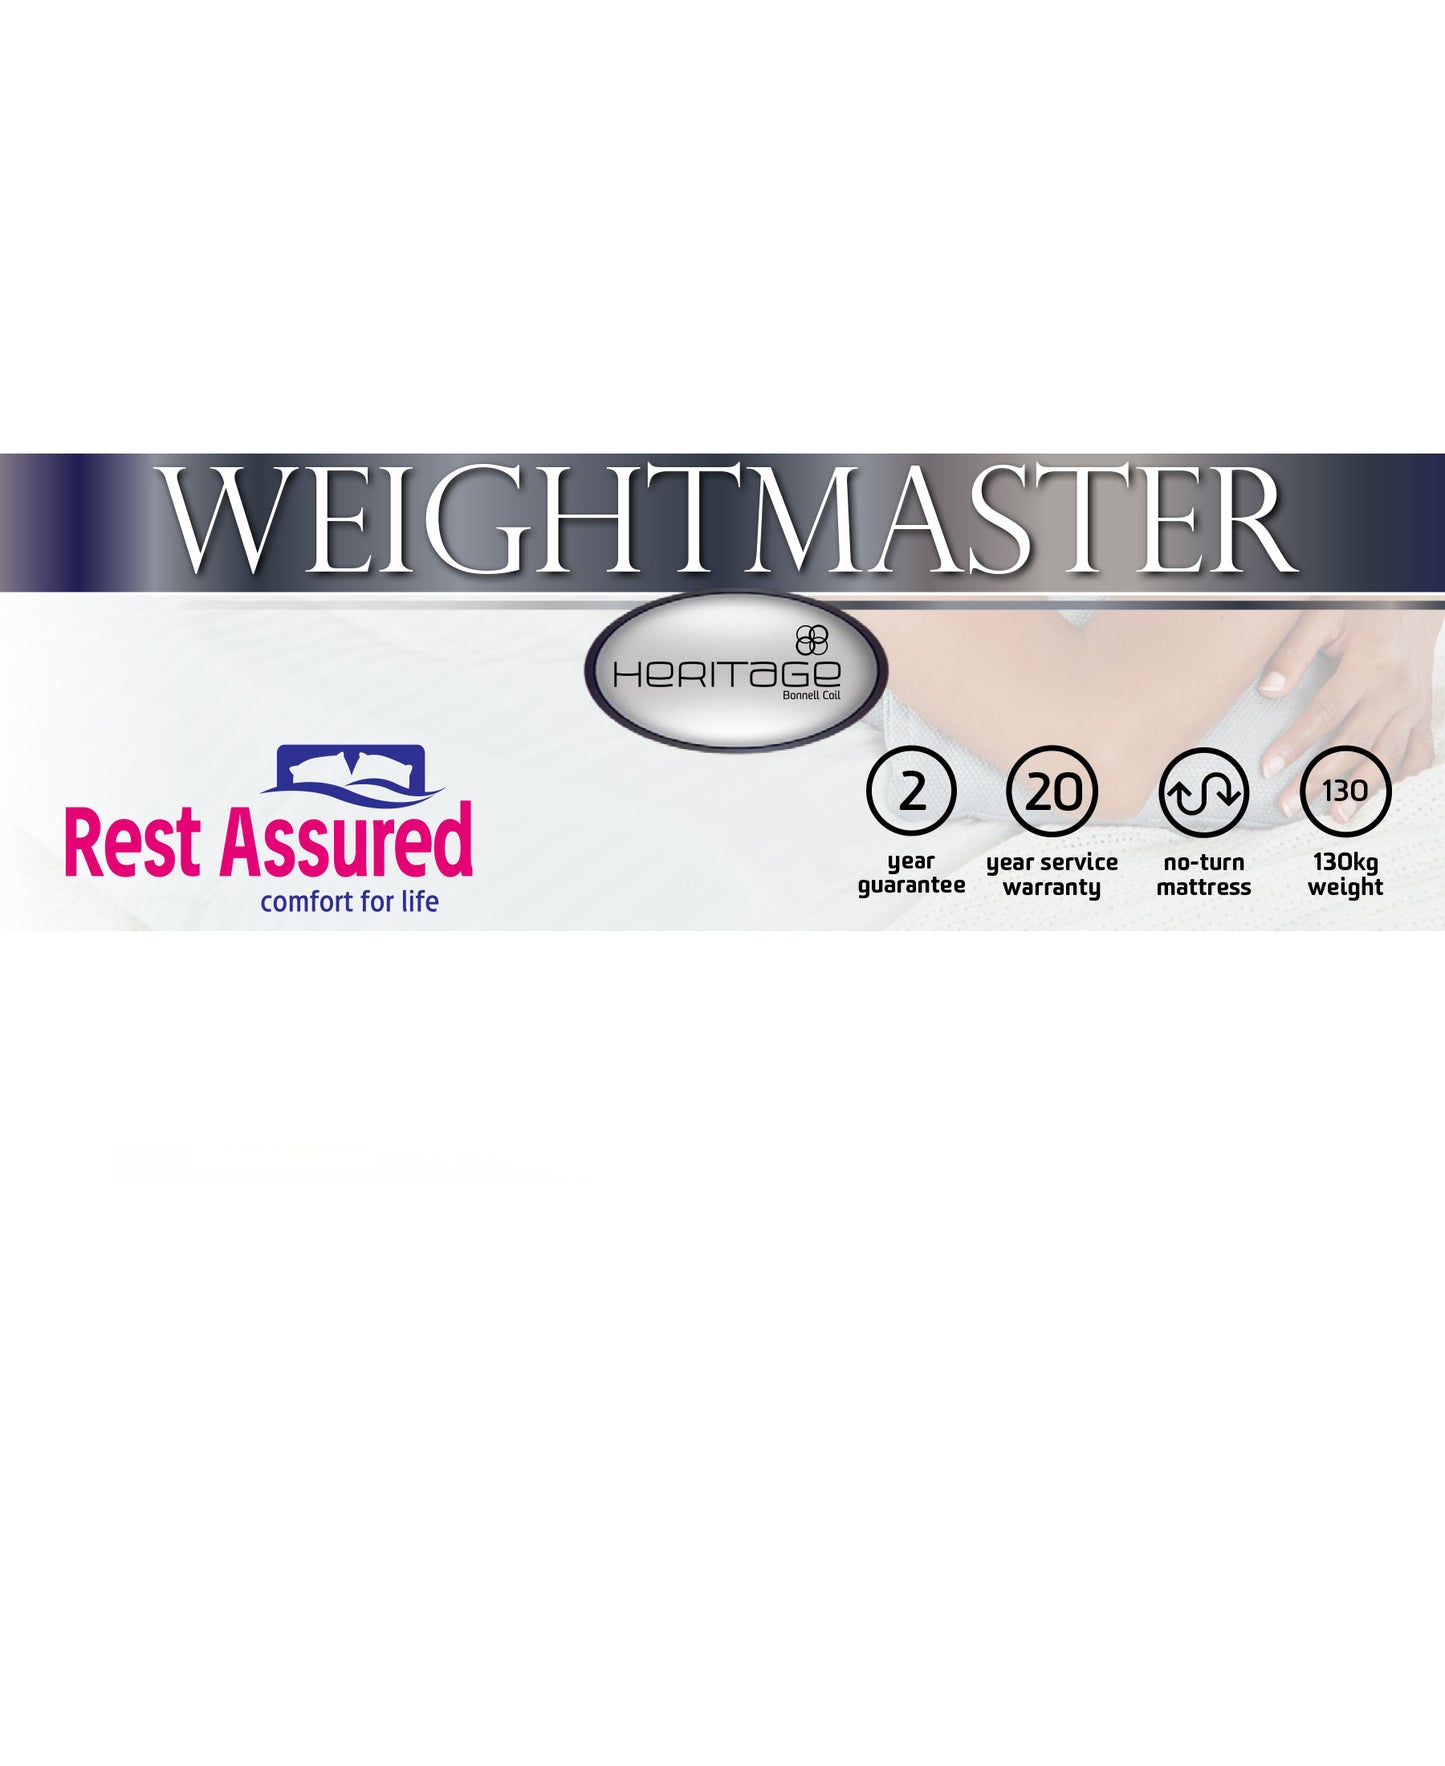 Rest Assured Weightmaster Mattress